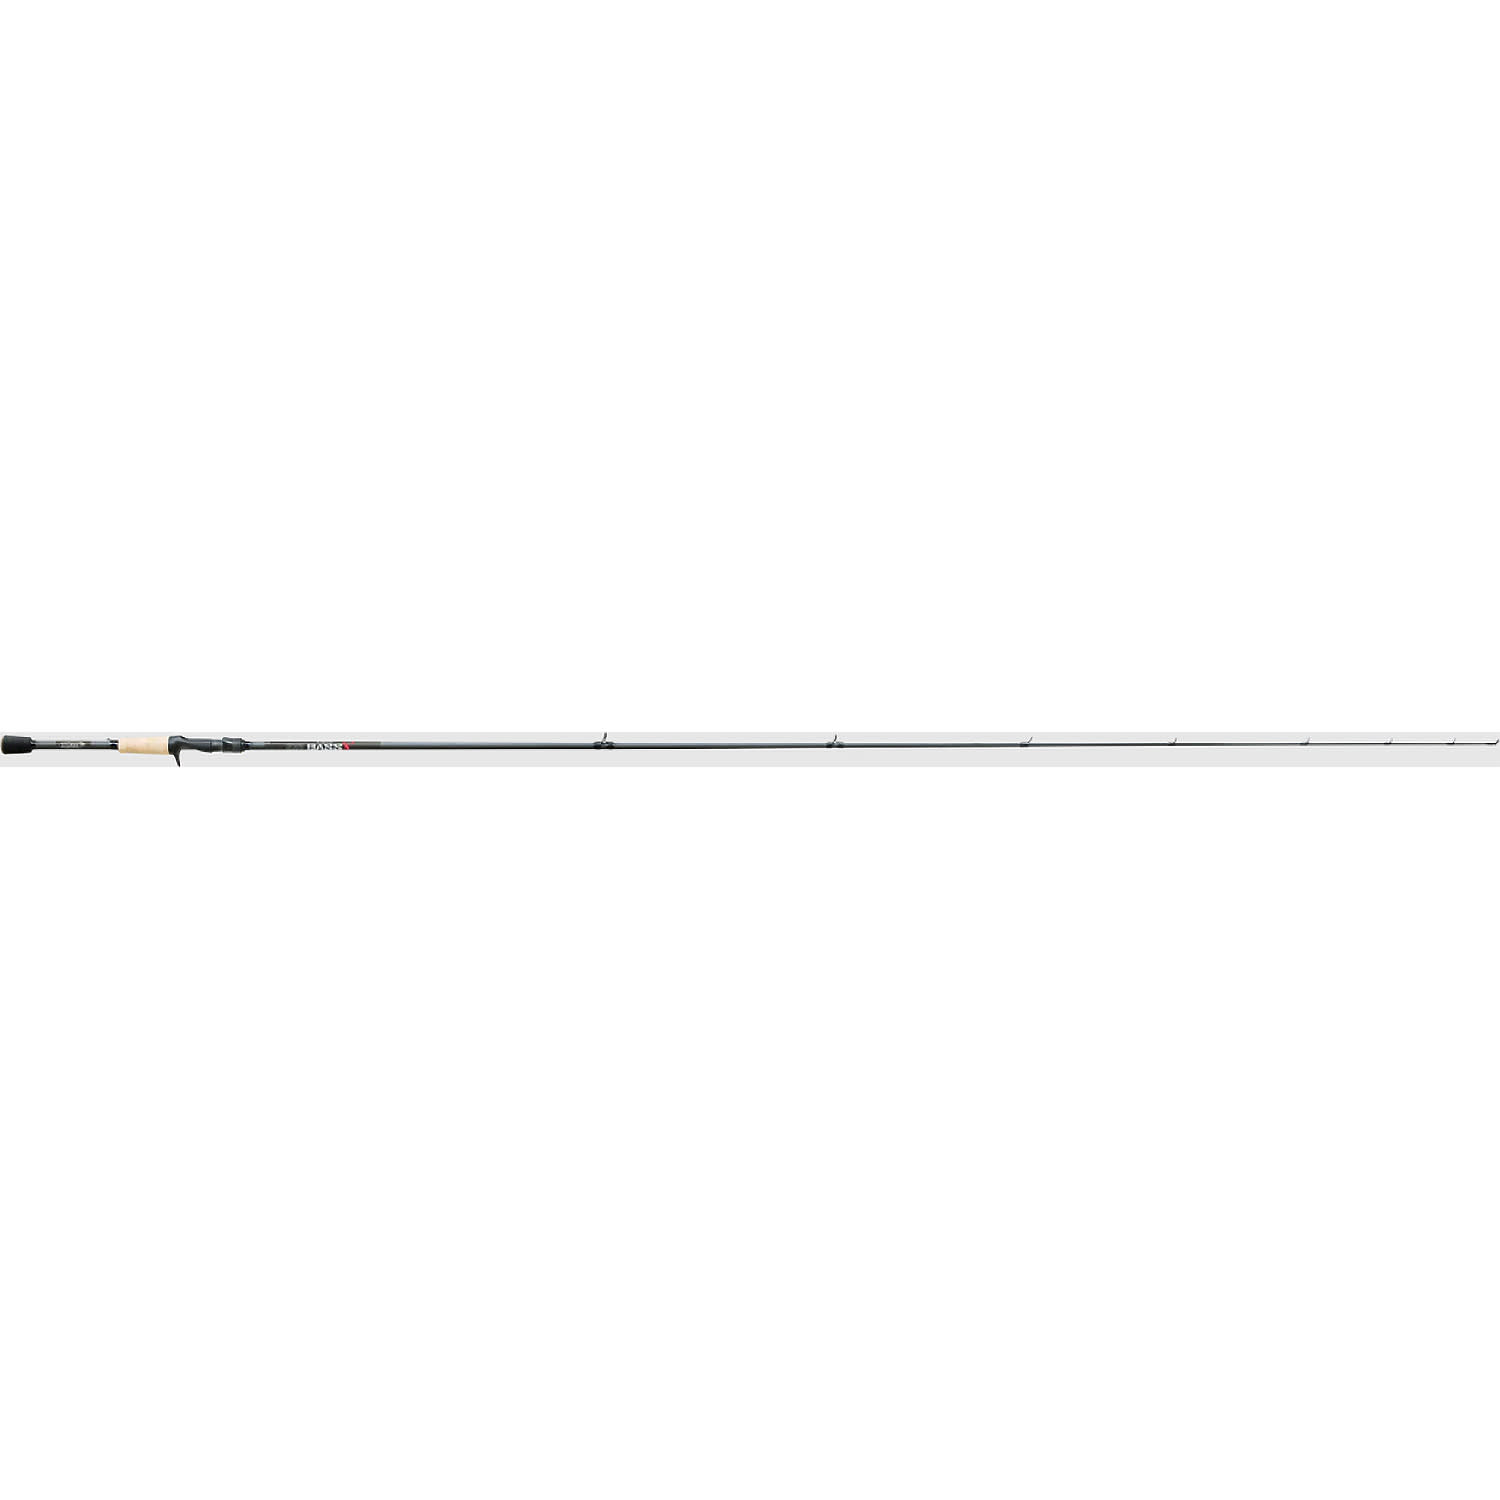 St. Croix® Bass X Casting Rod